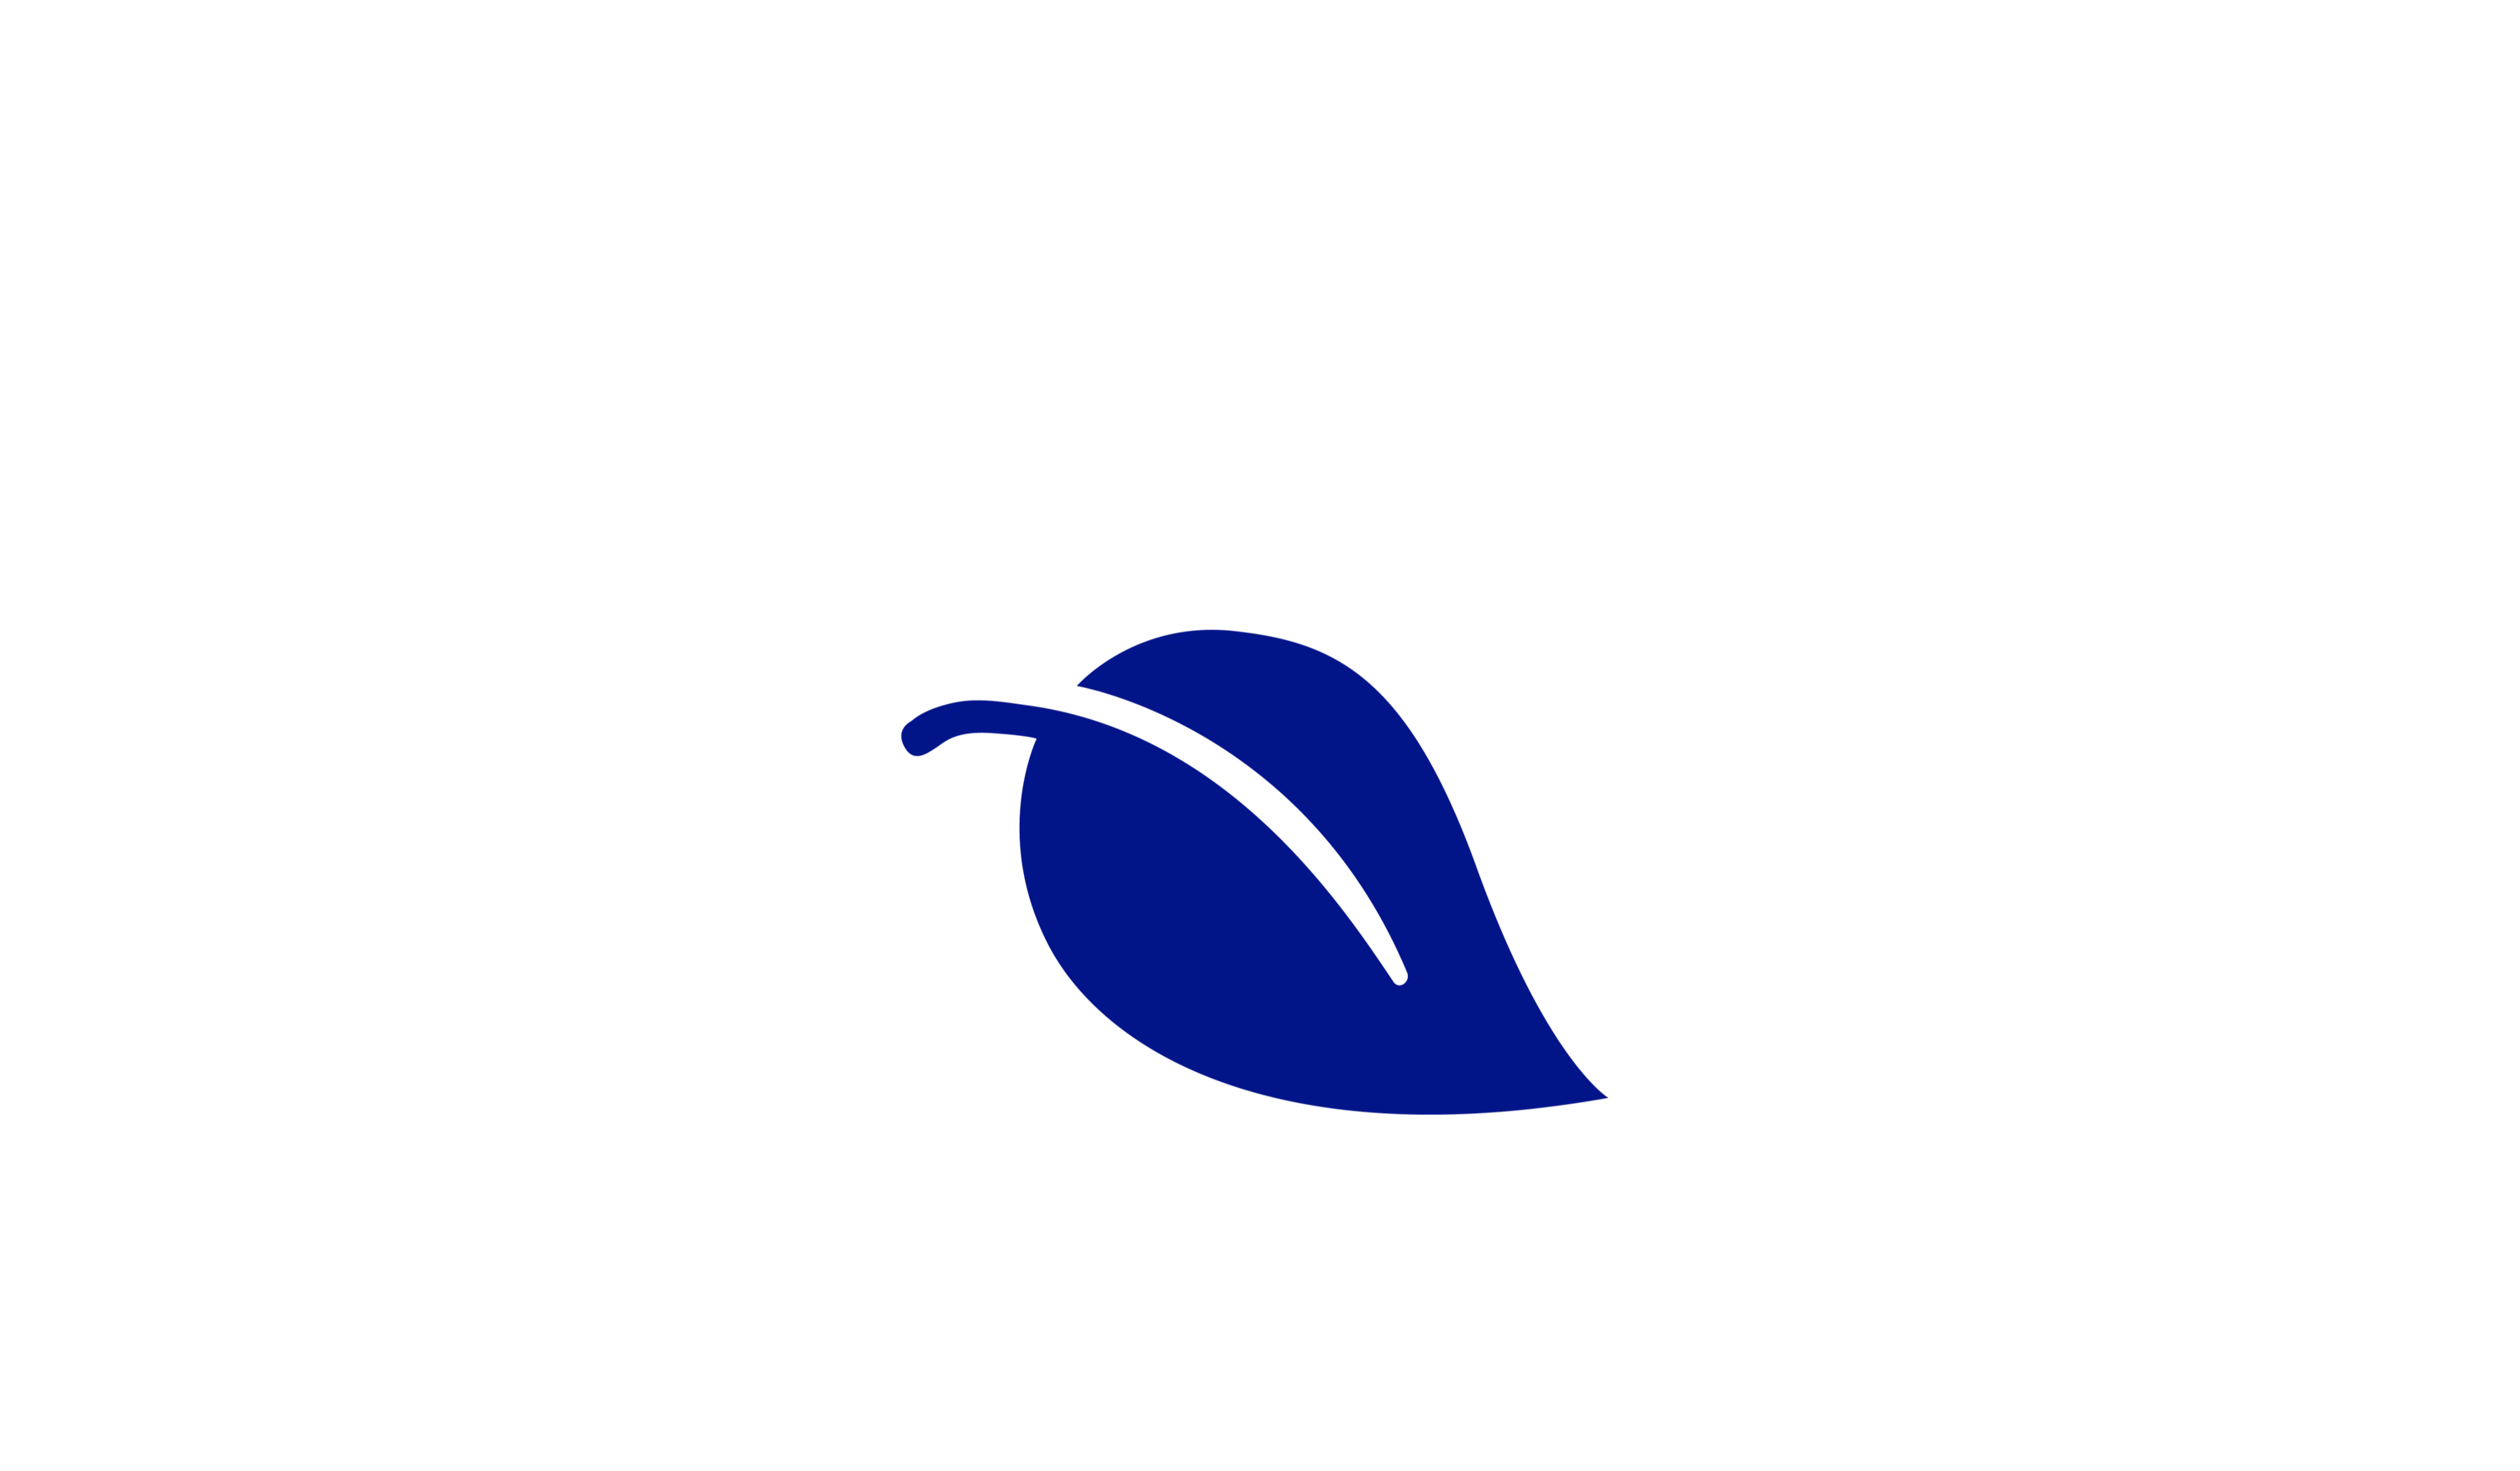 logotipo de la hoja